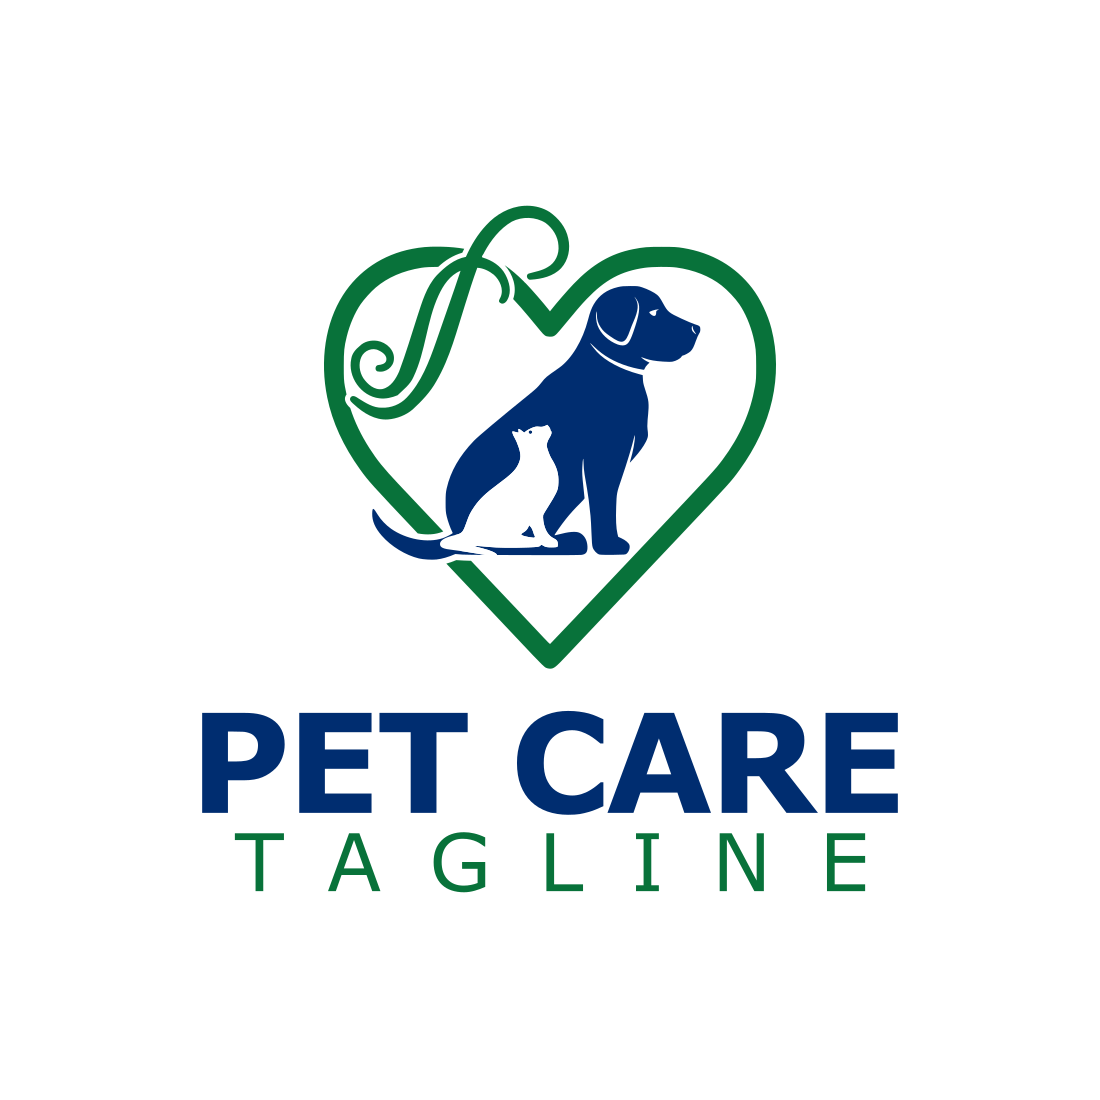 Pet Care Creative Logo Design Template previews.